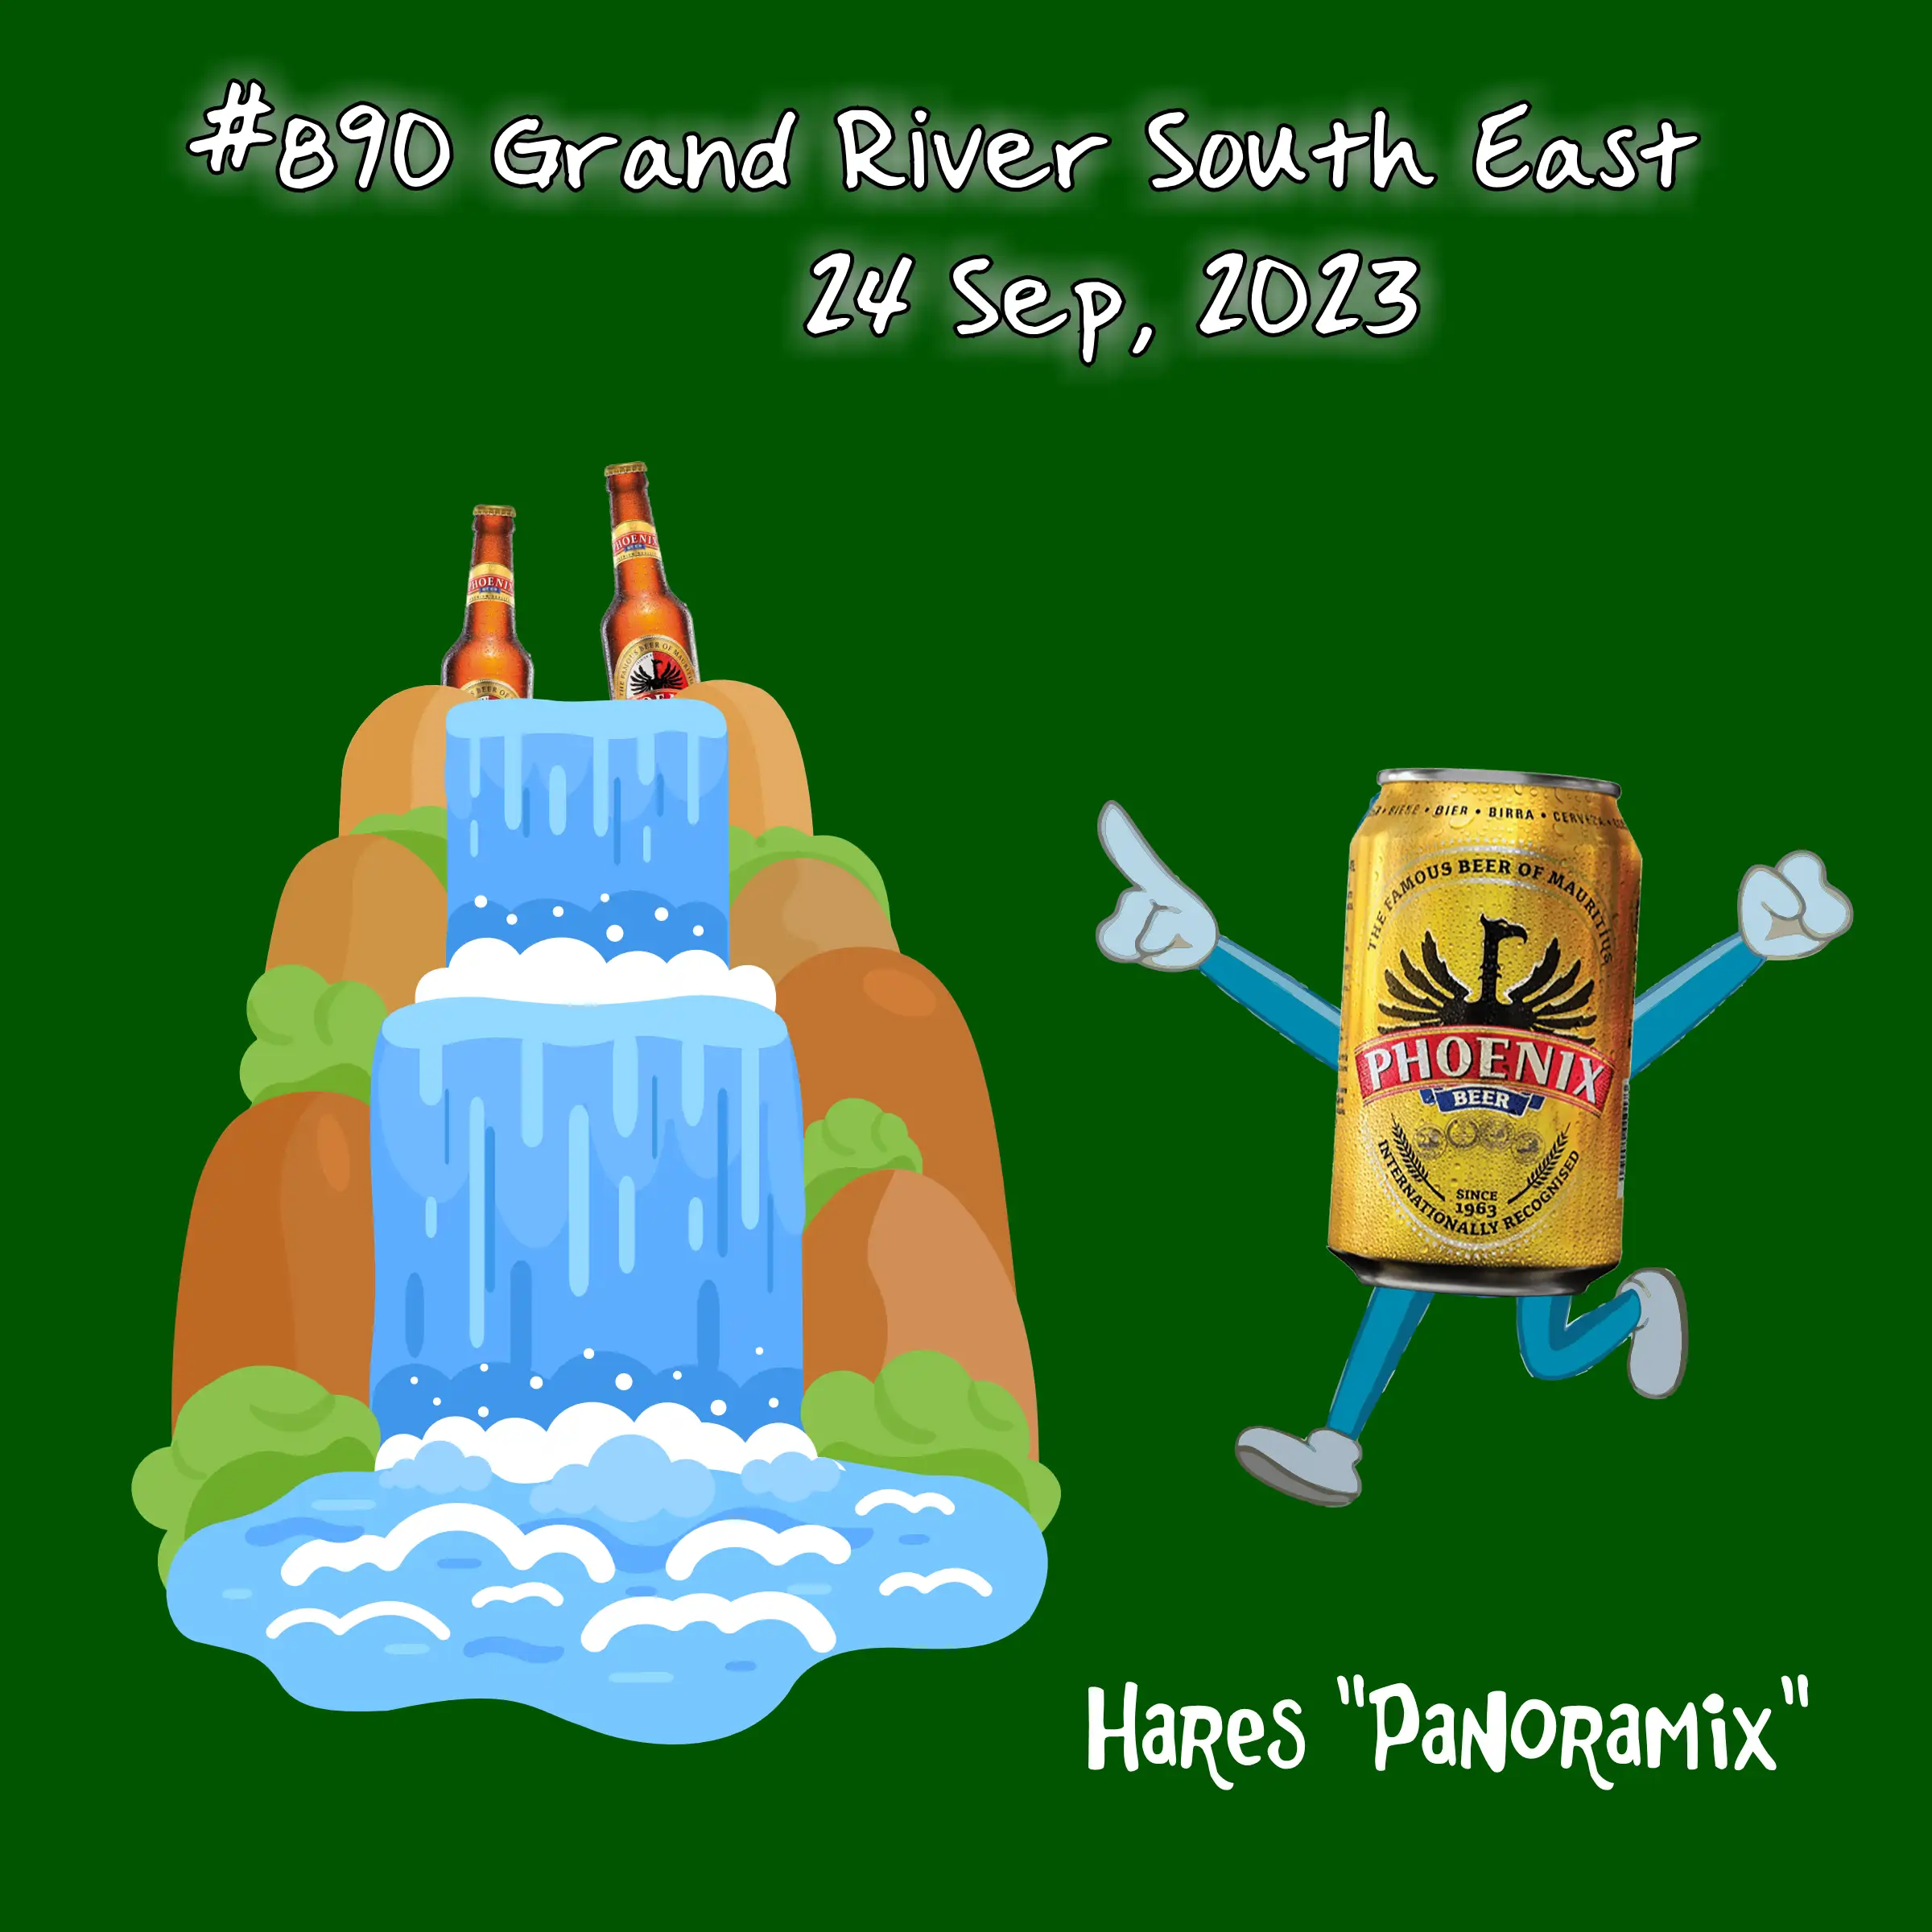 890 Grand River South East Hash Run Mauritius